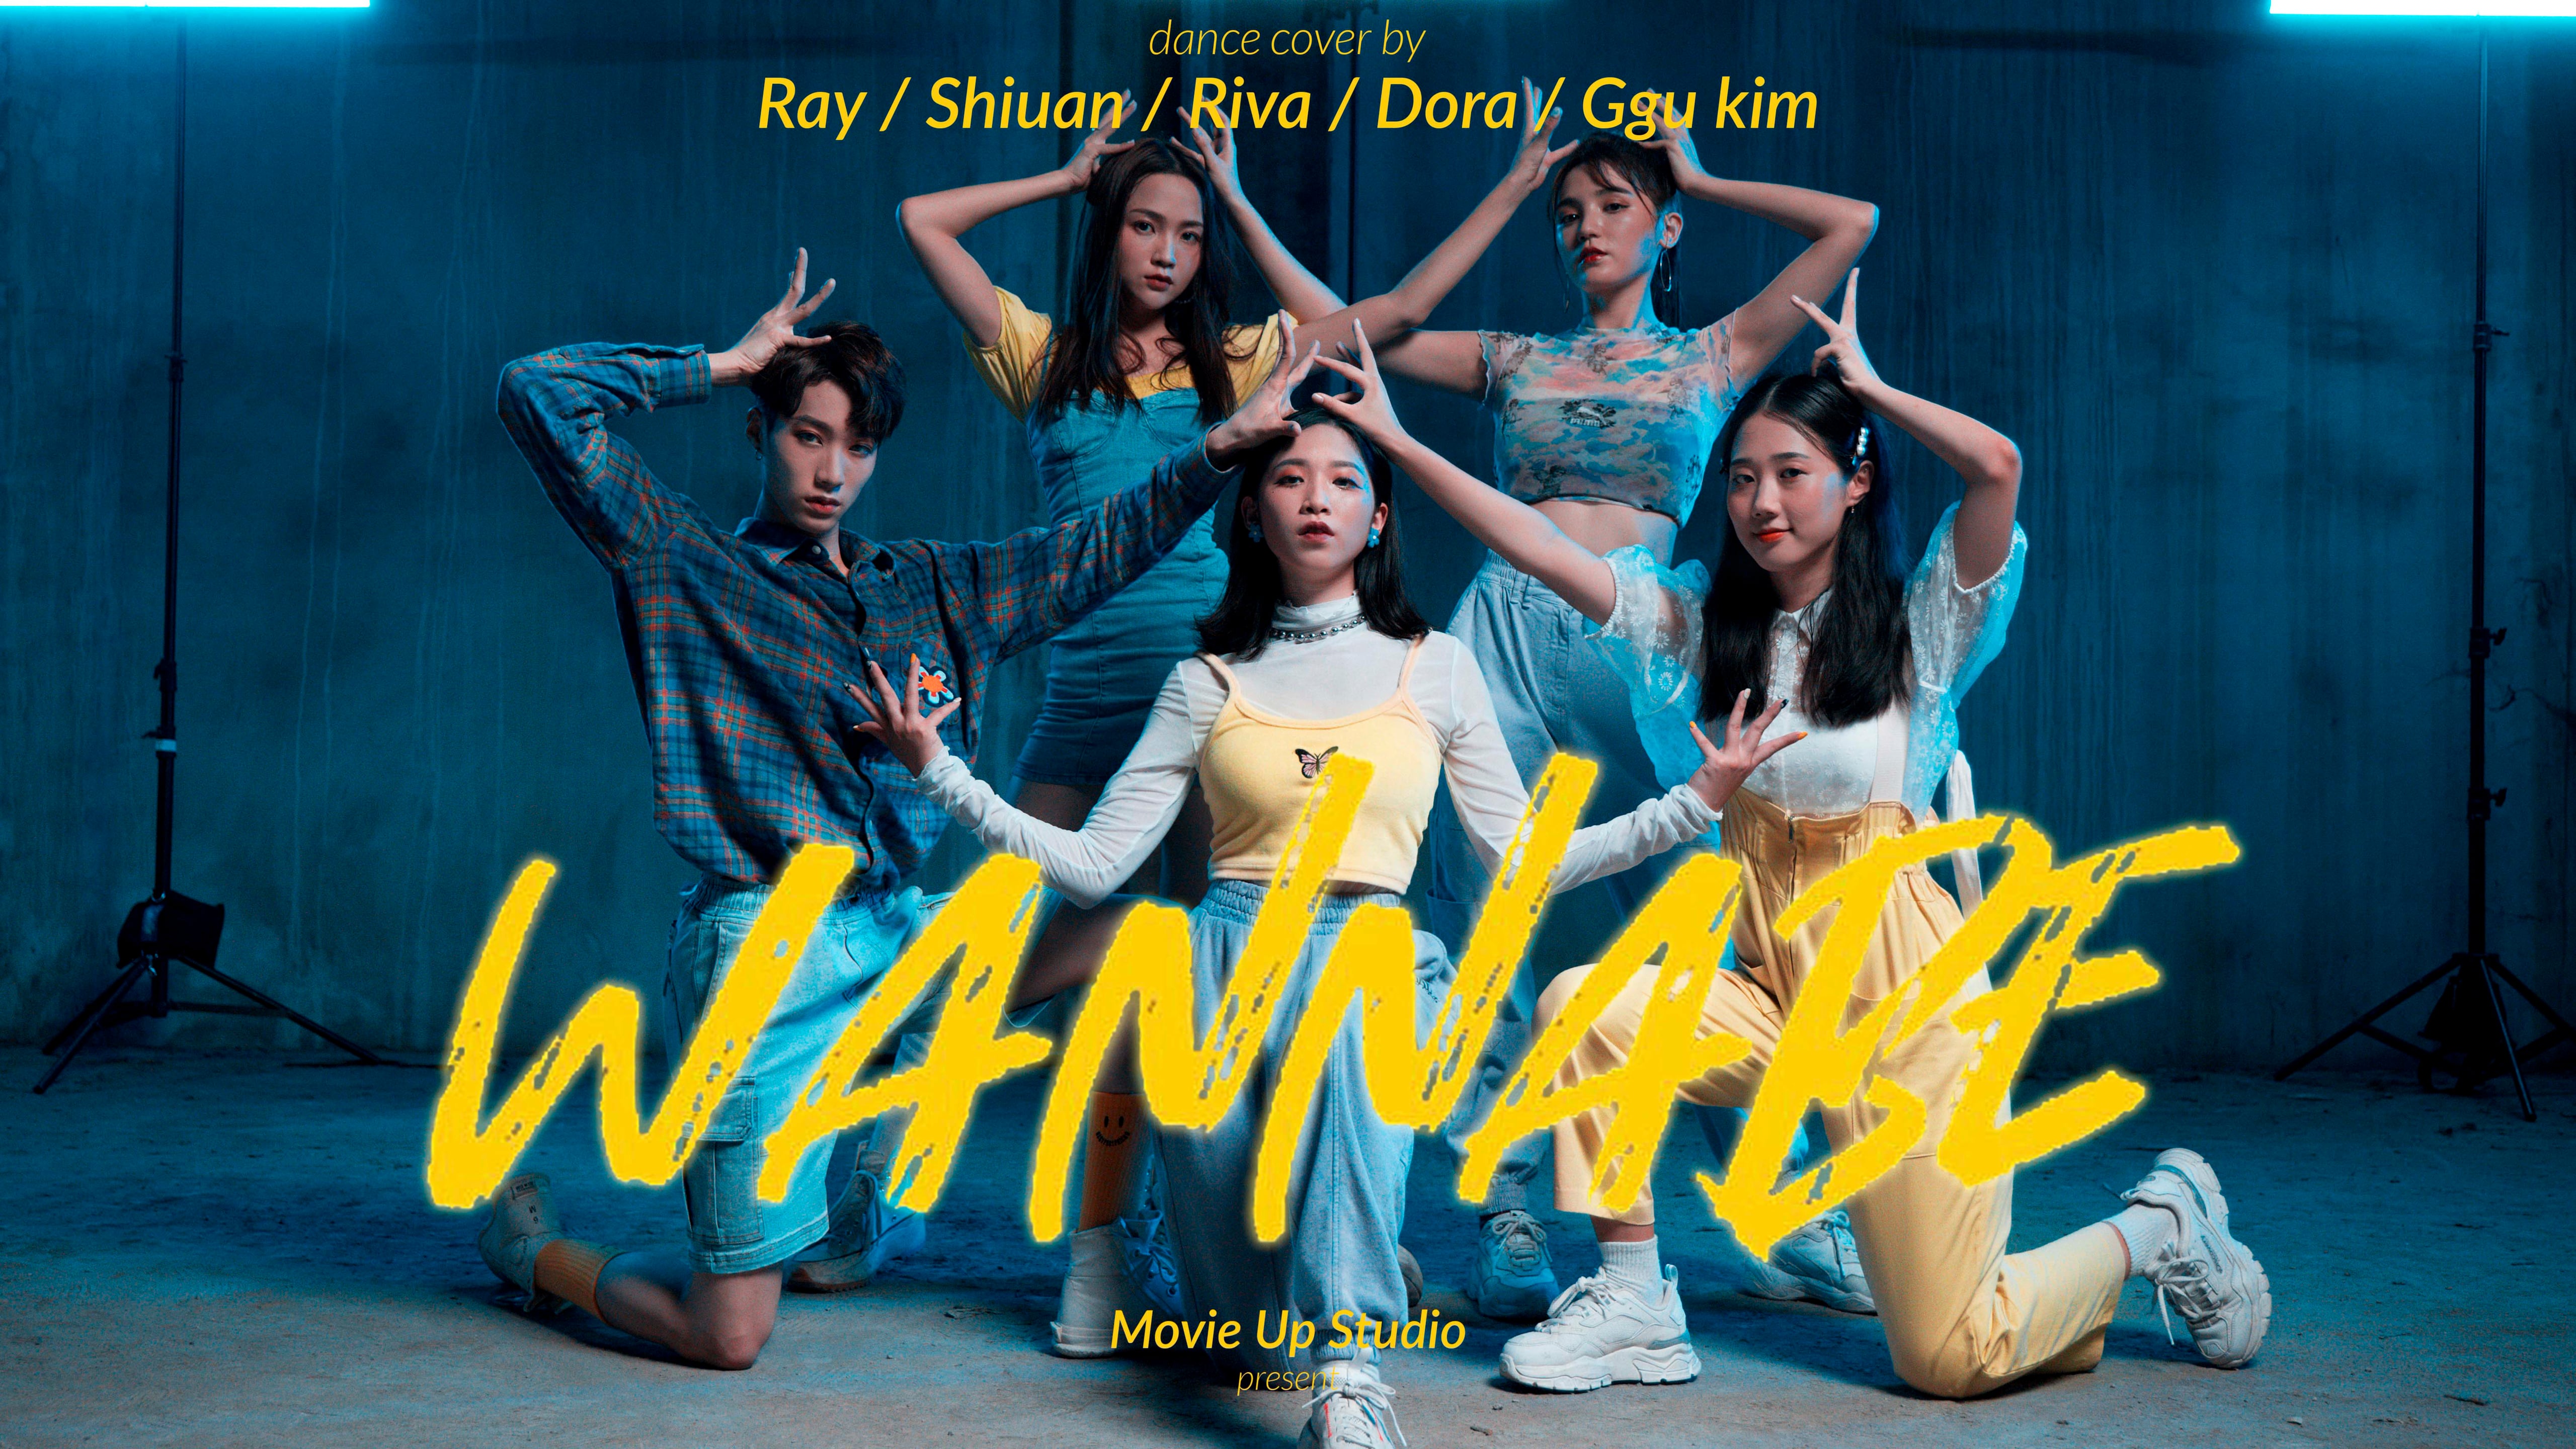 ITZY - 'WANNABE' Dance Cover | 柔蓁Riva、朵拉Dora、冠叡Ray、林萱Shiuan、金針菇찐쩐꾸